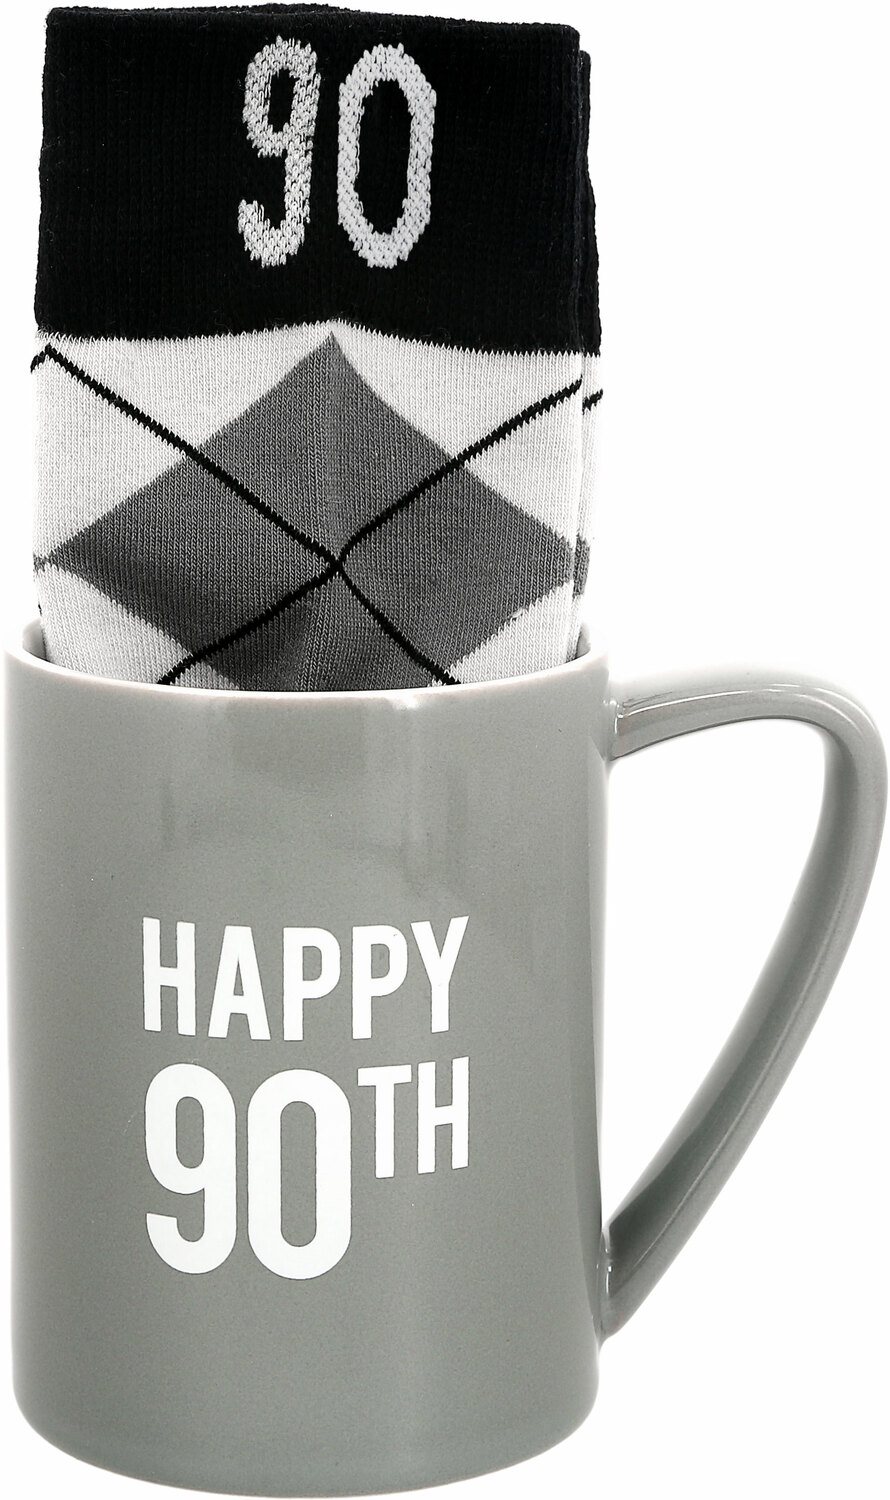 Happy 90th by Man Made - Happy 90th - 18 oz Mug and Sock Set